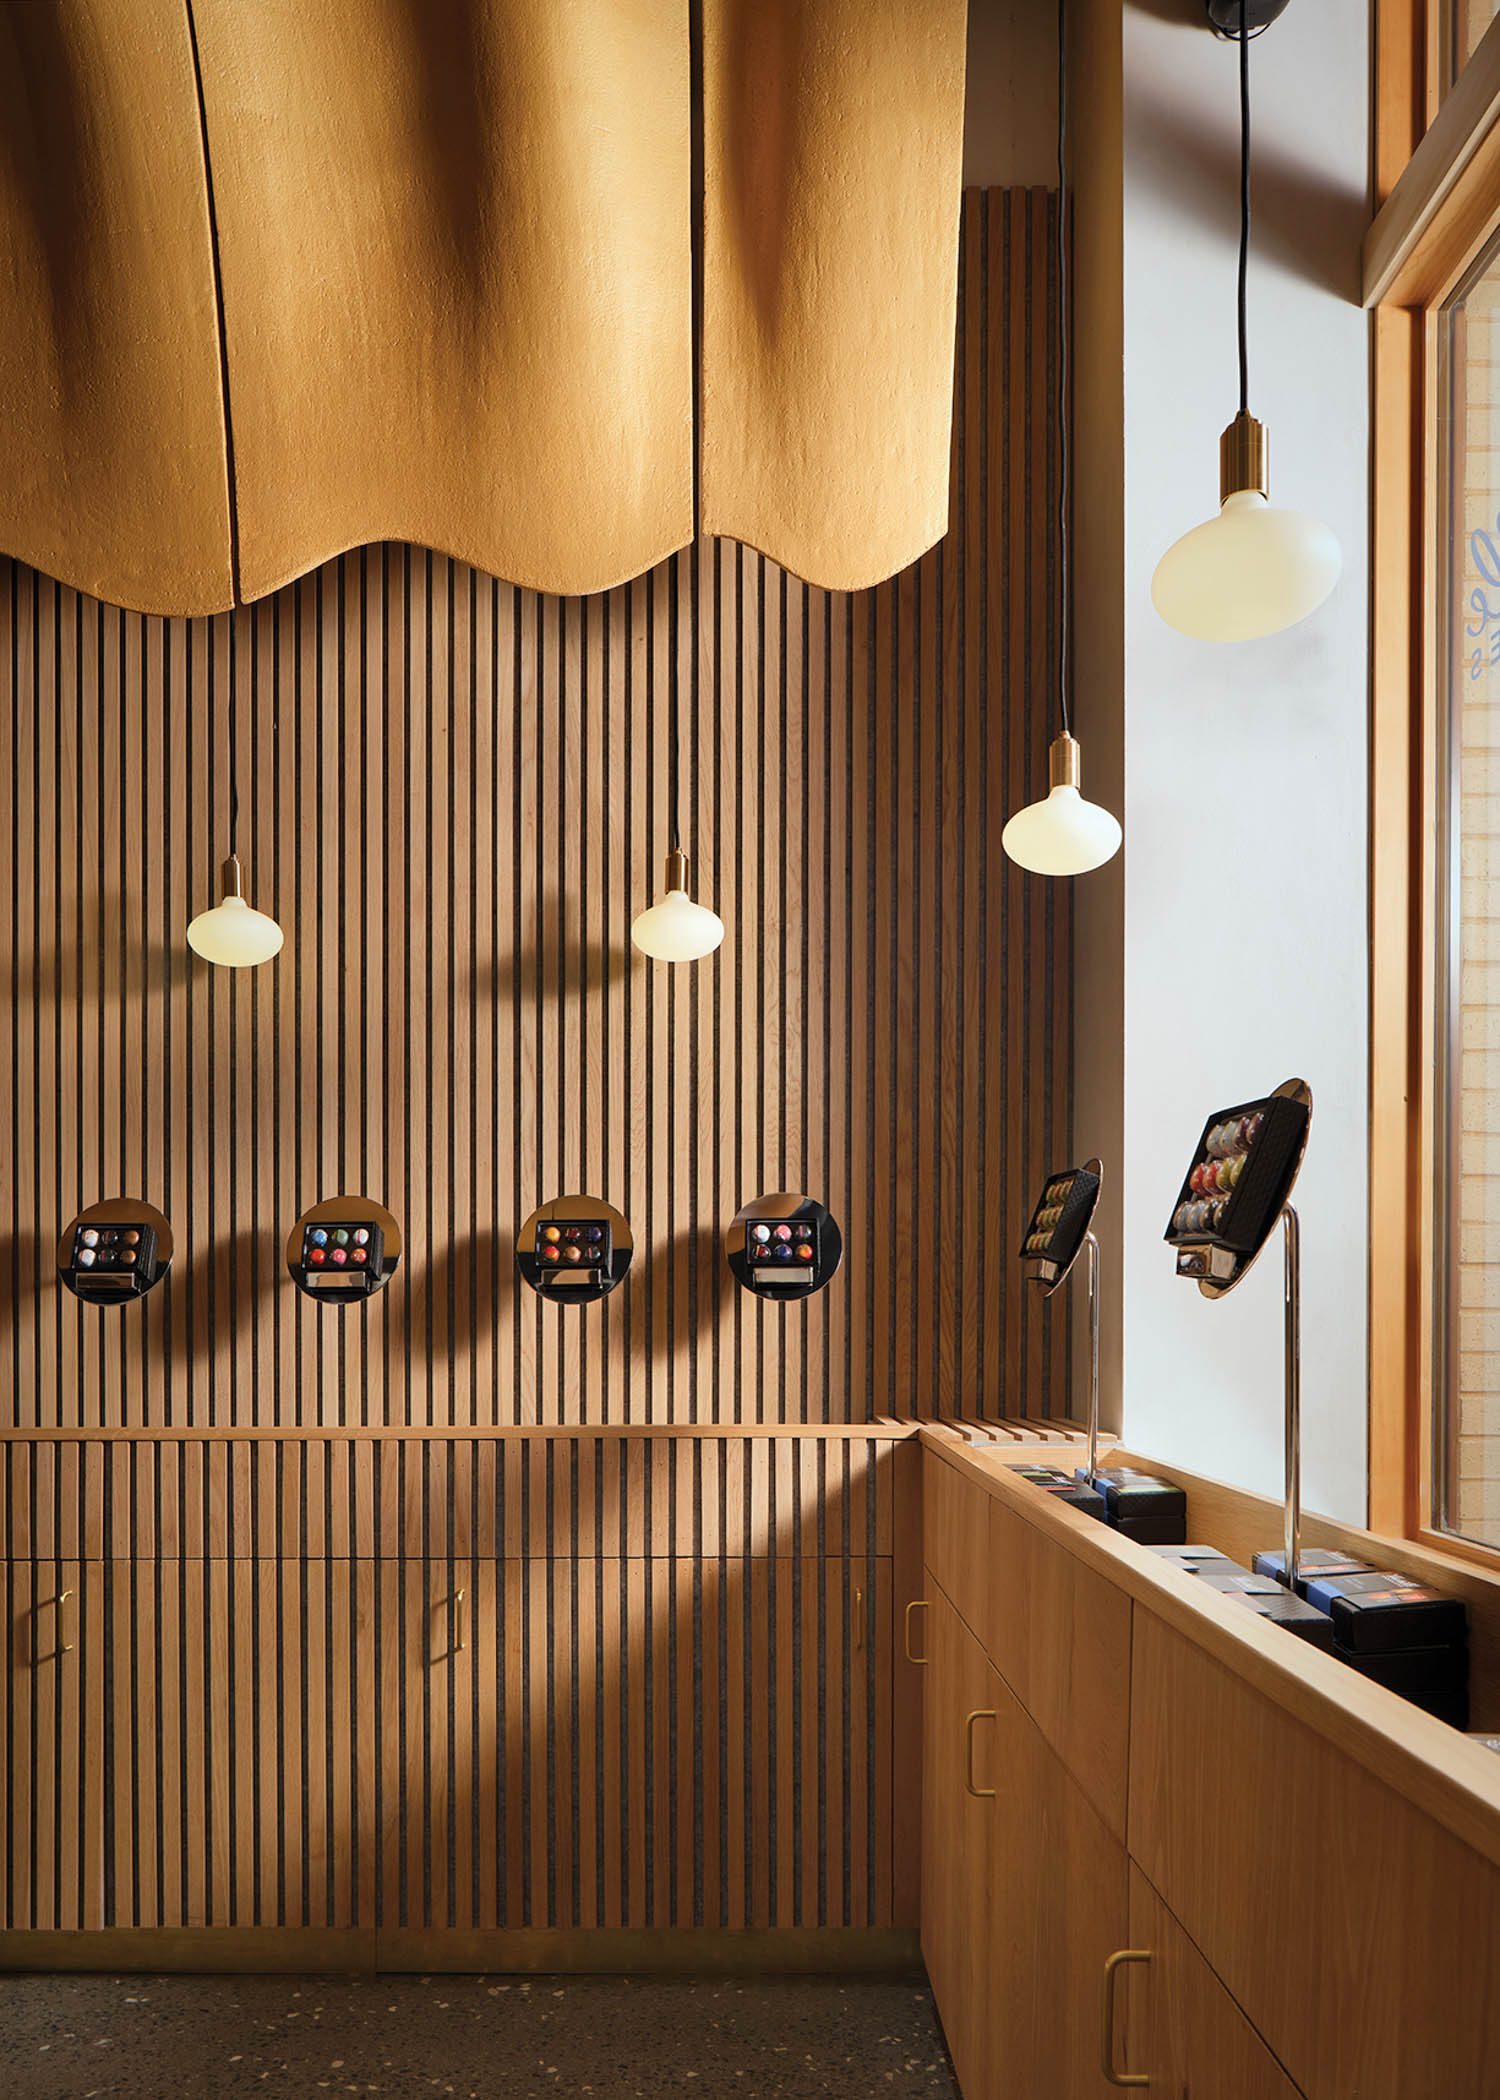 paneled walls with circular displays for chocolates